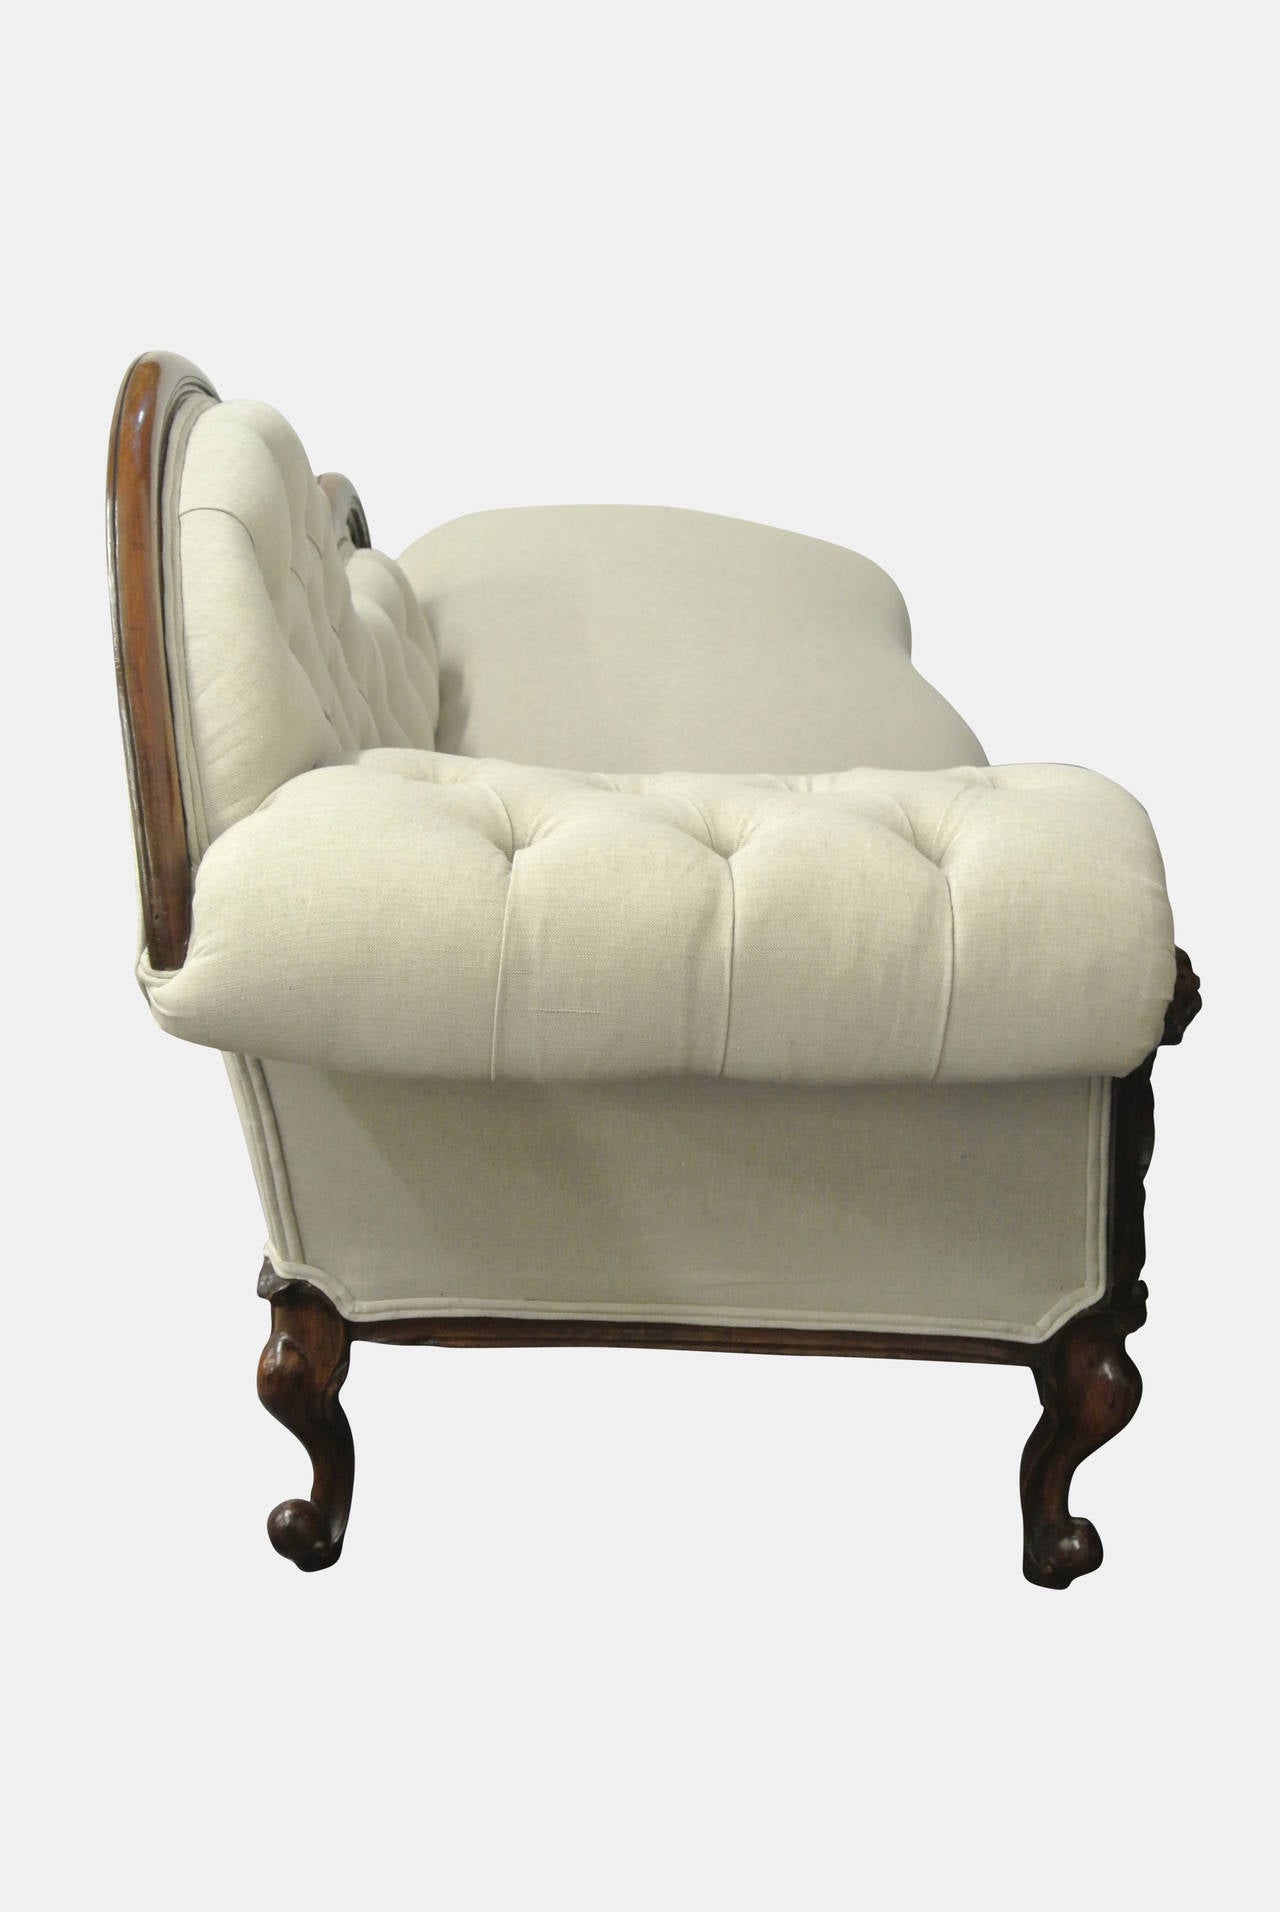 Victorian 19th Century Walnut Chaise Longue